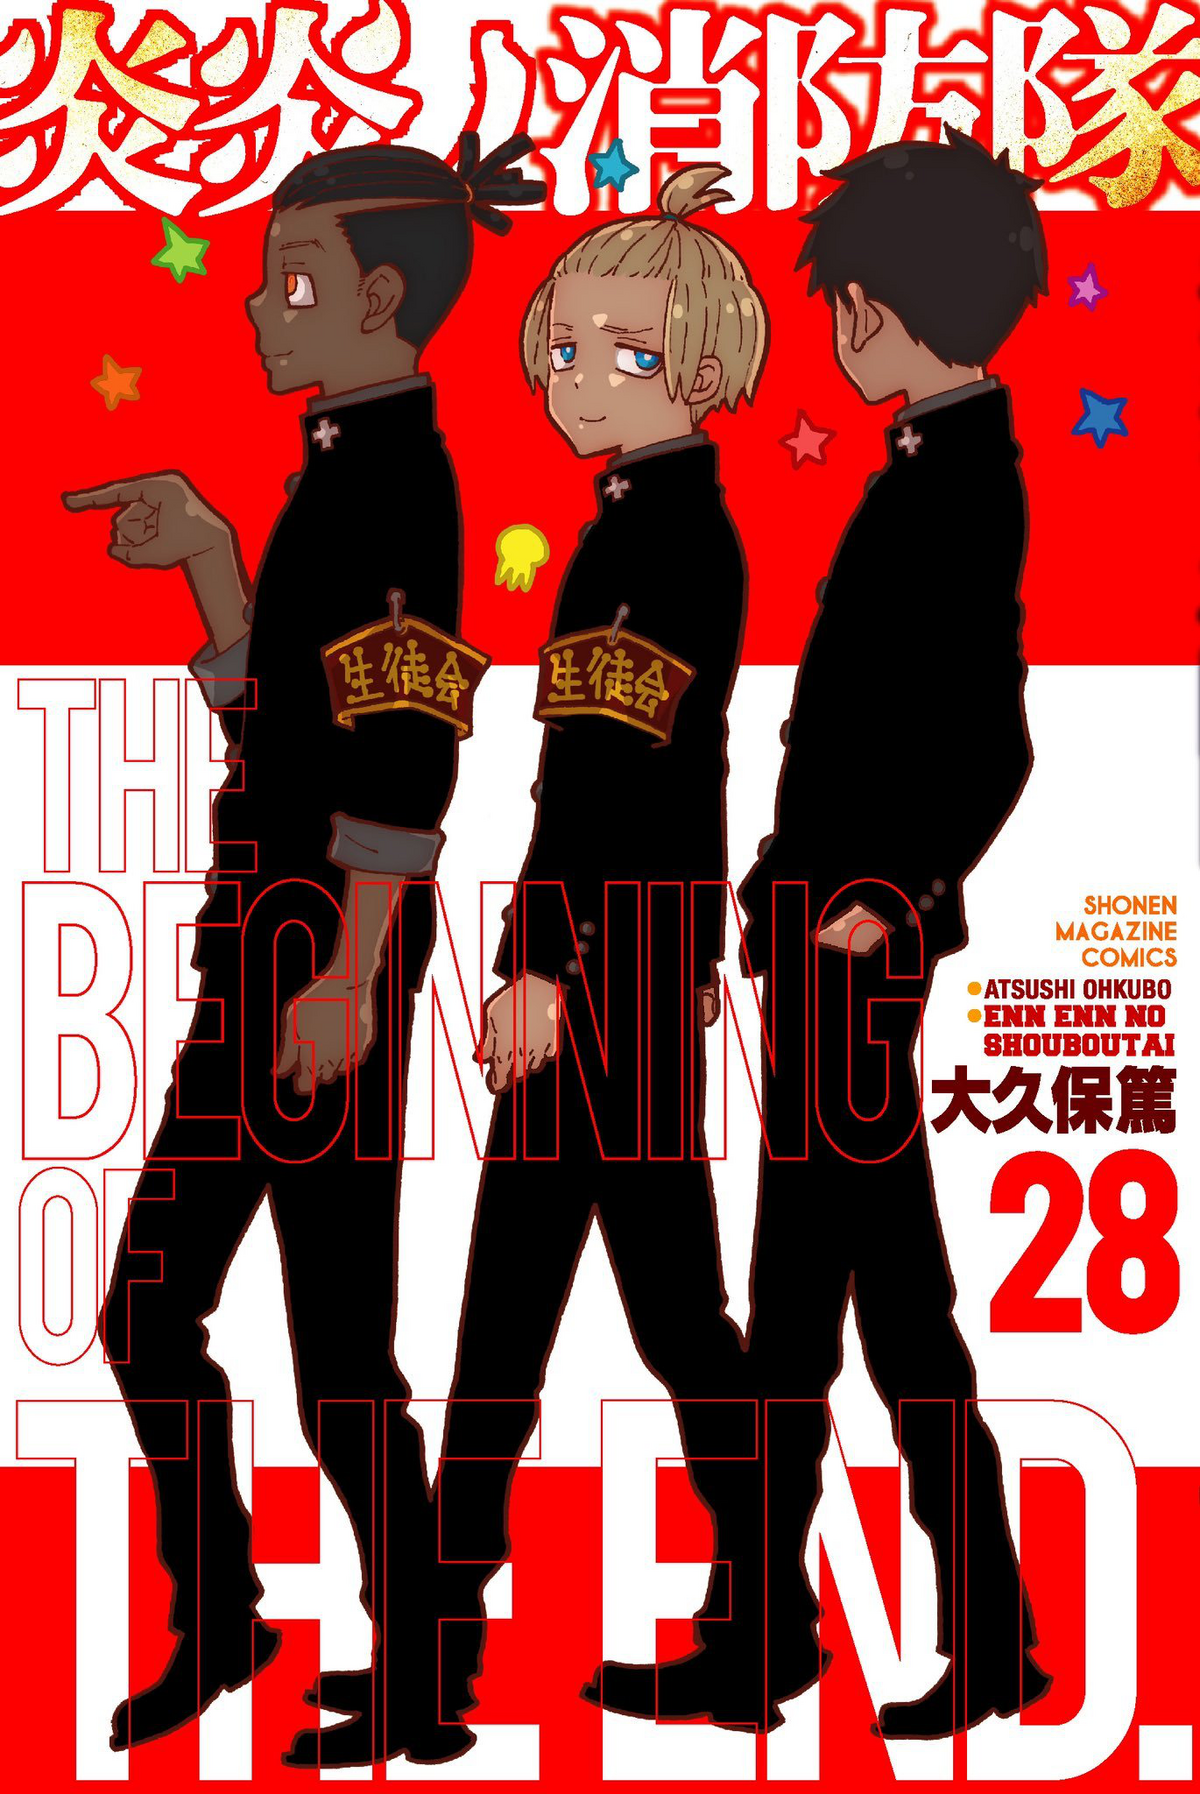 Fire Brigade of Flames manga 28, page 11.